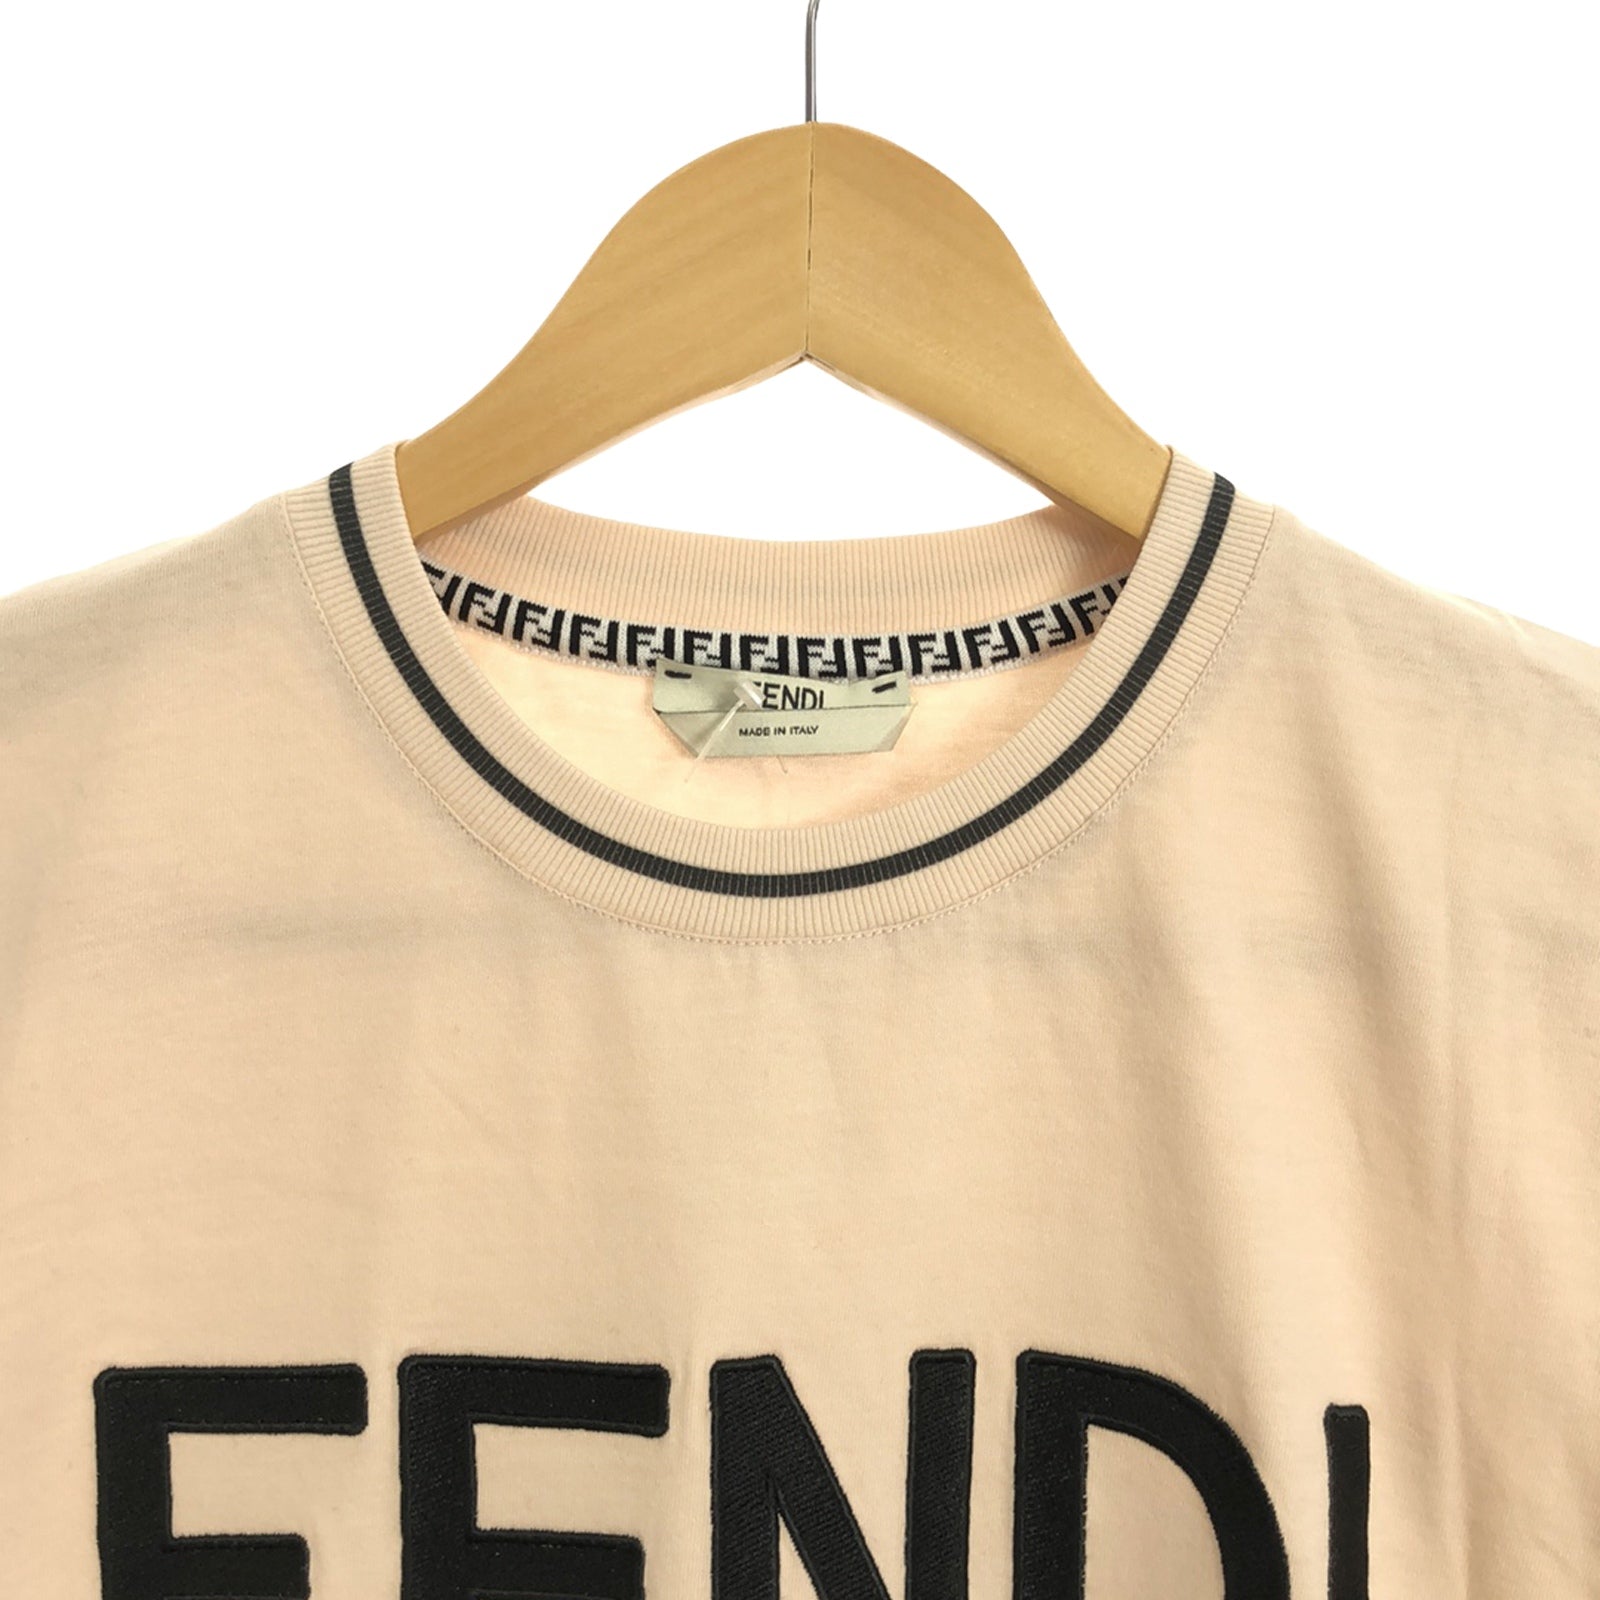 Fendi Fendi  Half-Handy Half-Handy   Tops Cotton  Pink FS7254AC6B